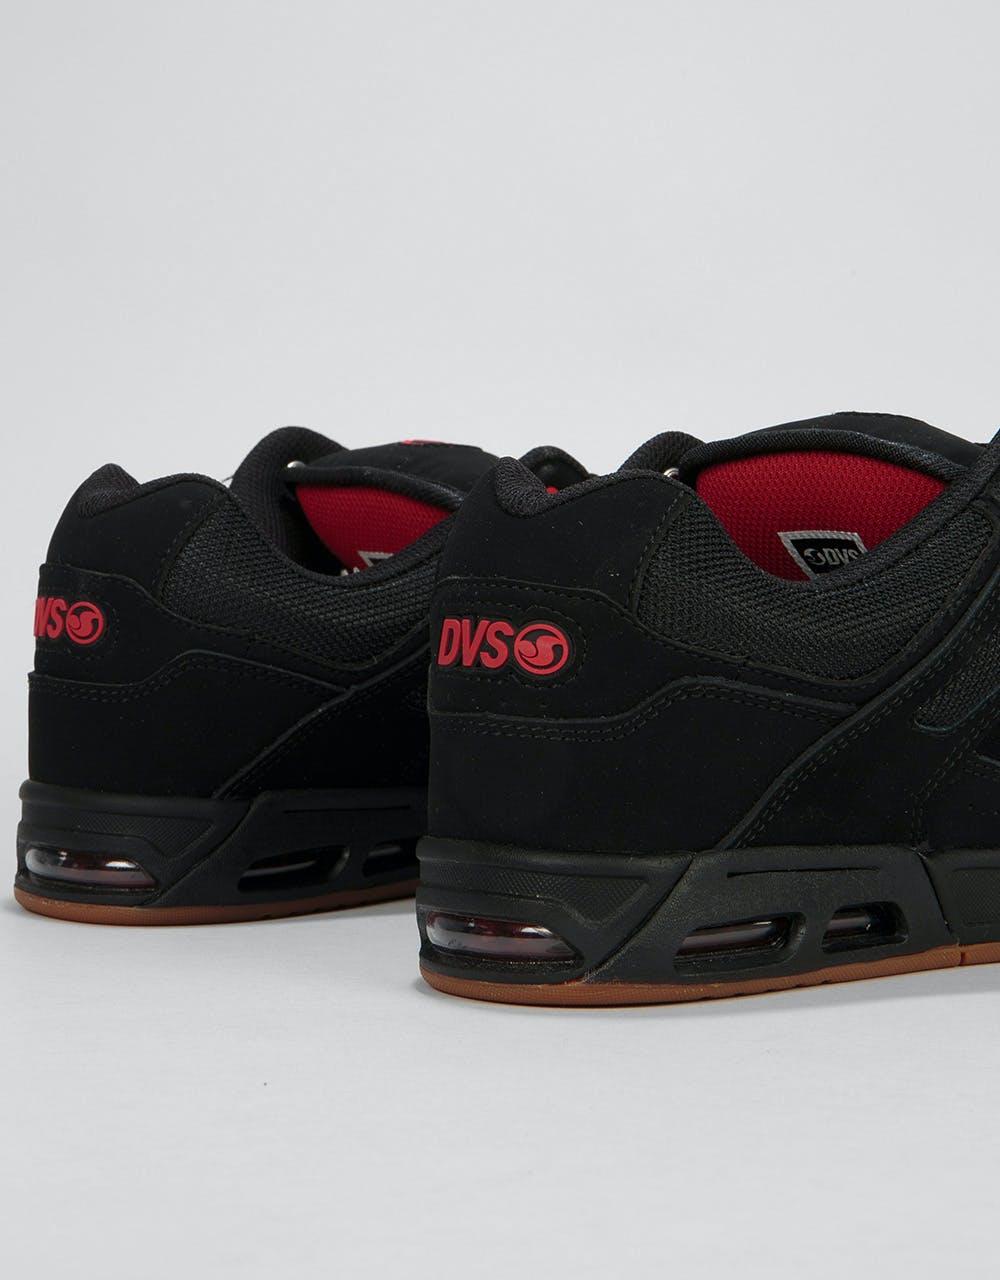 DVS Enduro Heir Skate Shoes - Black/Red/Gum Nubuck